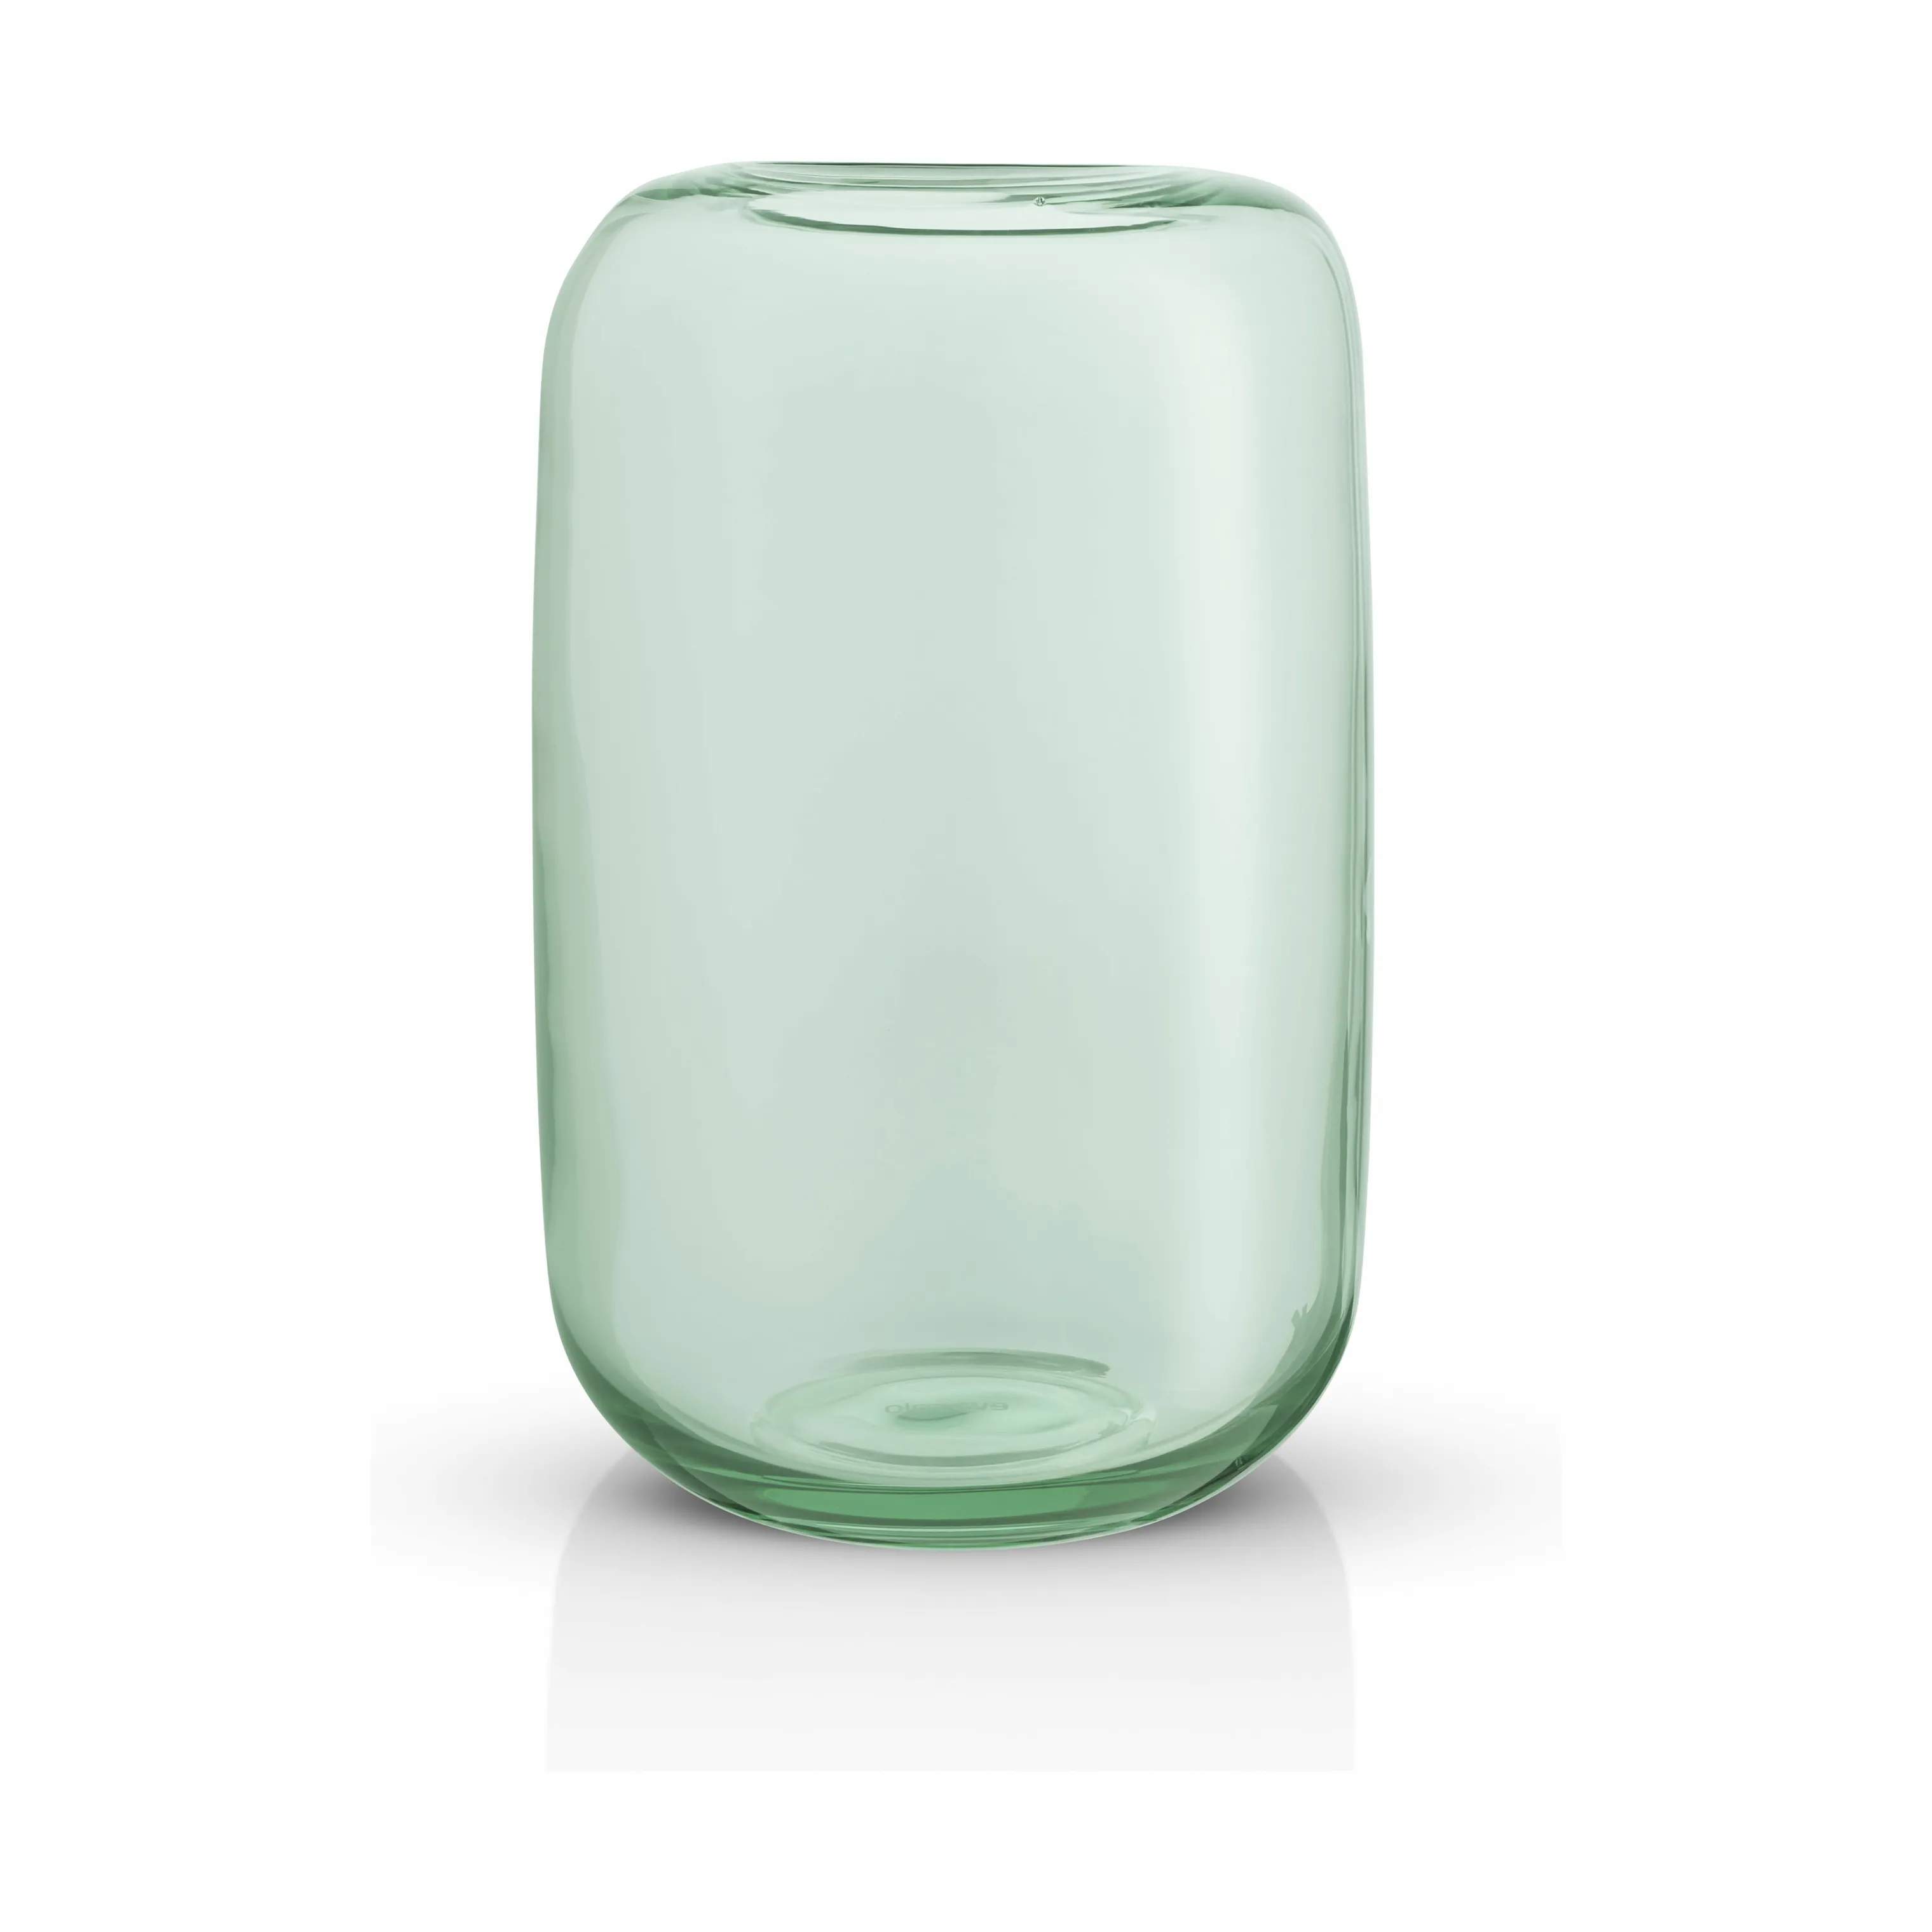 Acorn Vase, mint green, large